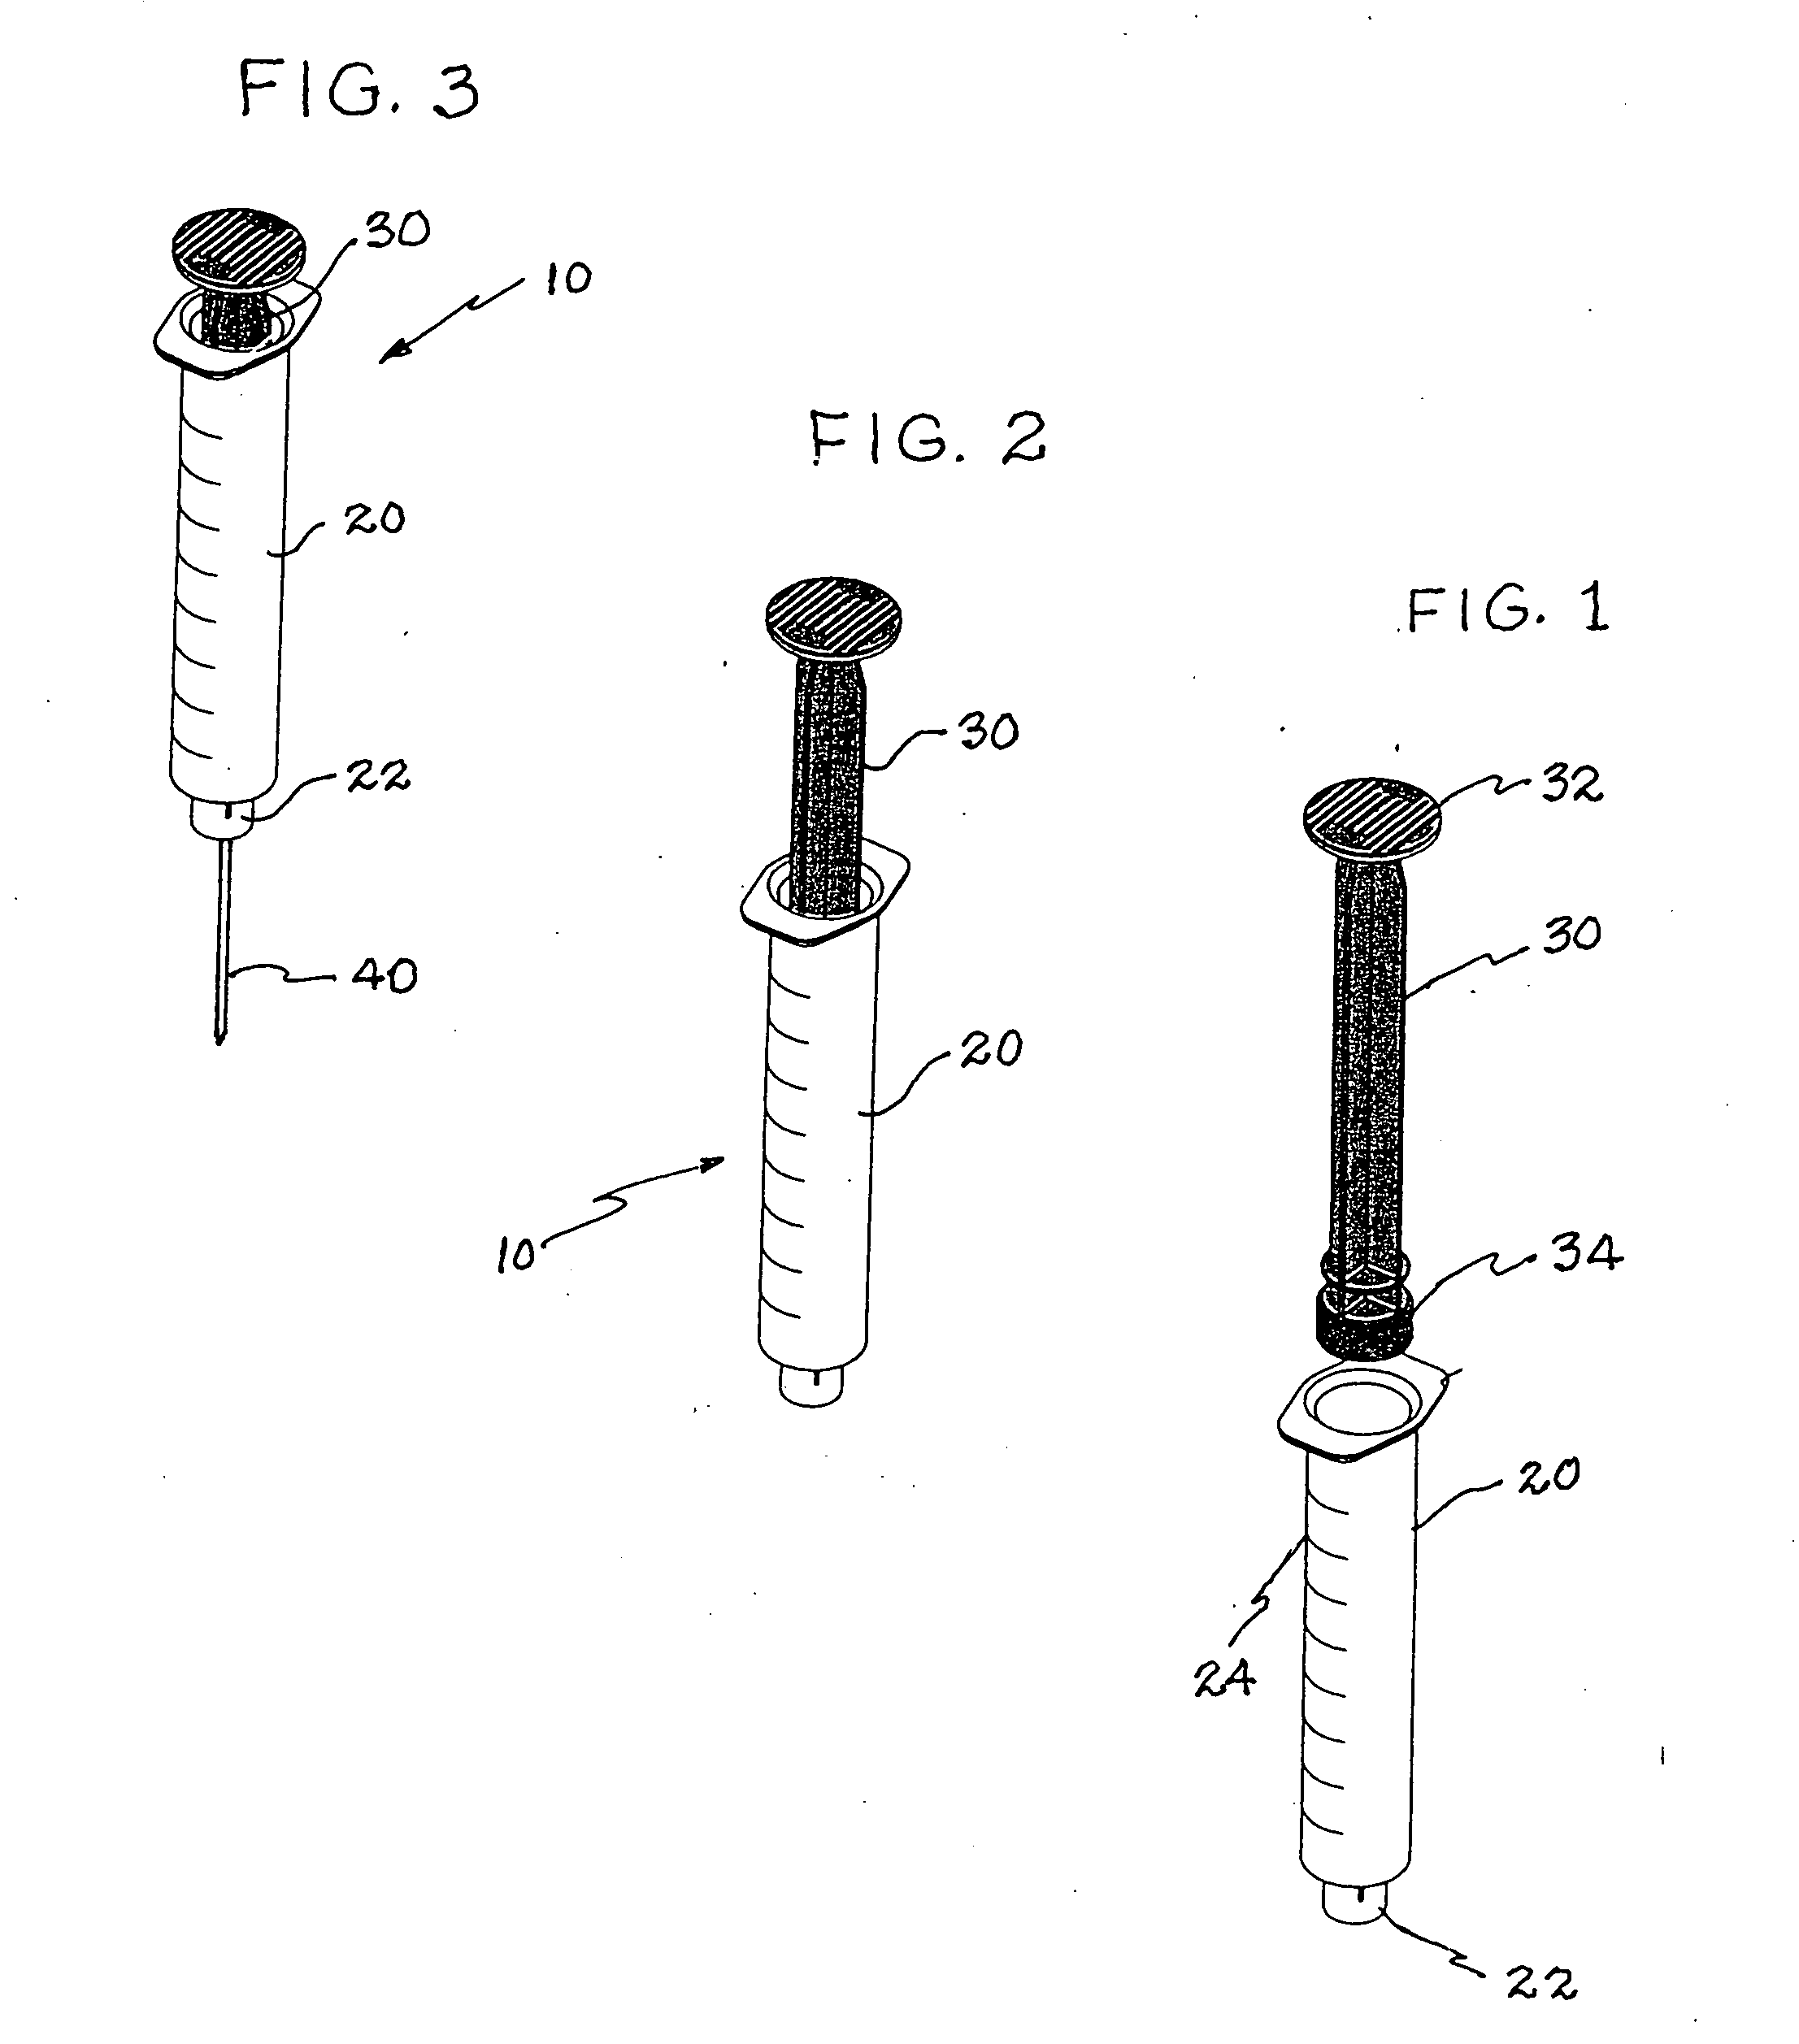 Medical syringe with colored plunger and transparent barrel assembly